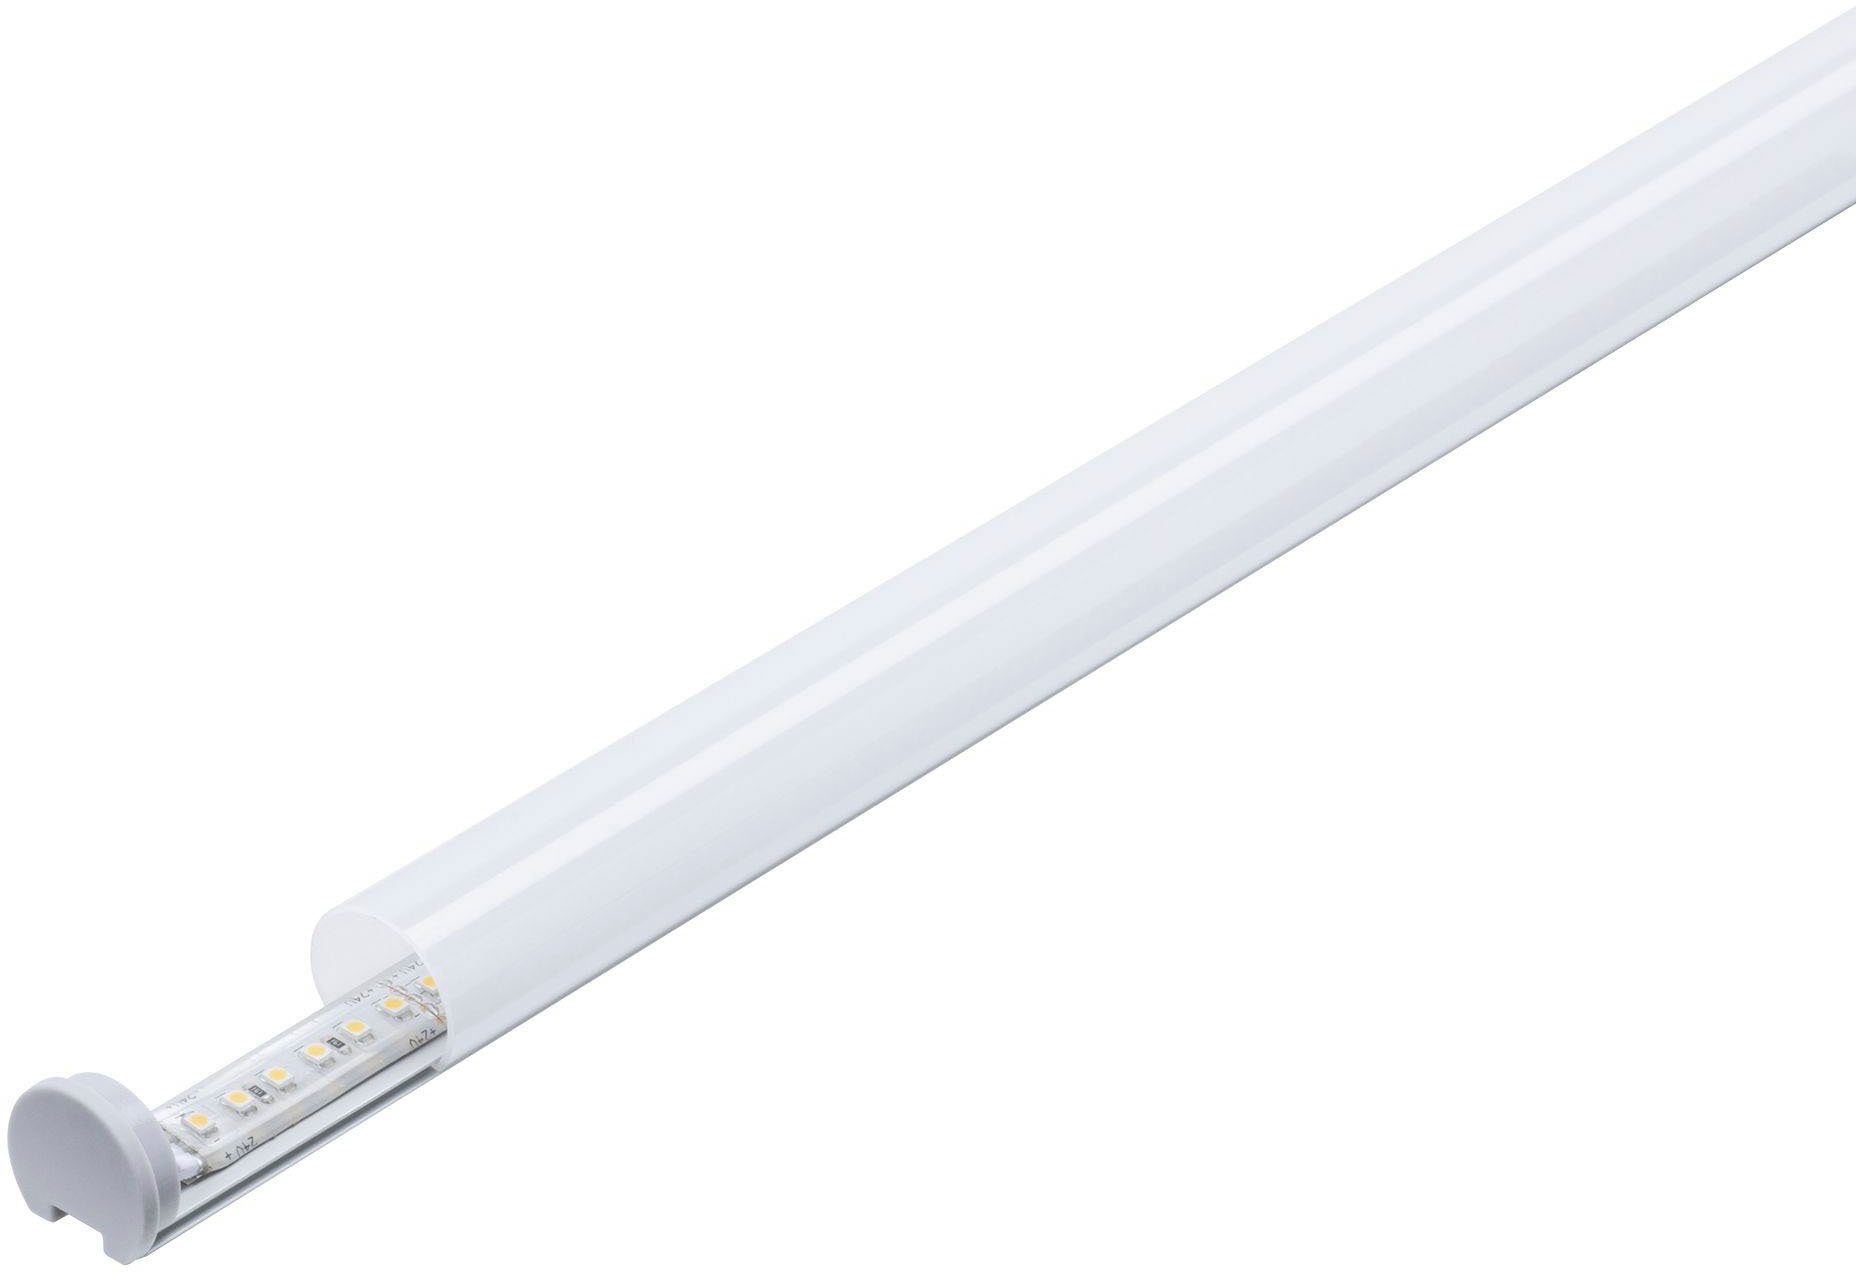 Diffusor 100 LED-Streifen Set Profil cm inkl. Endkappen Paulmann Clips, Tube und